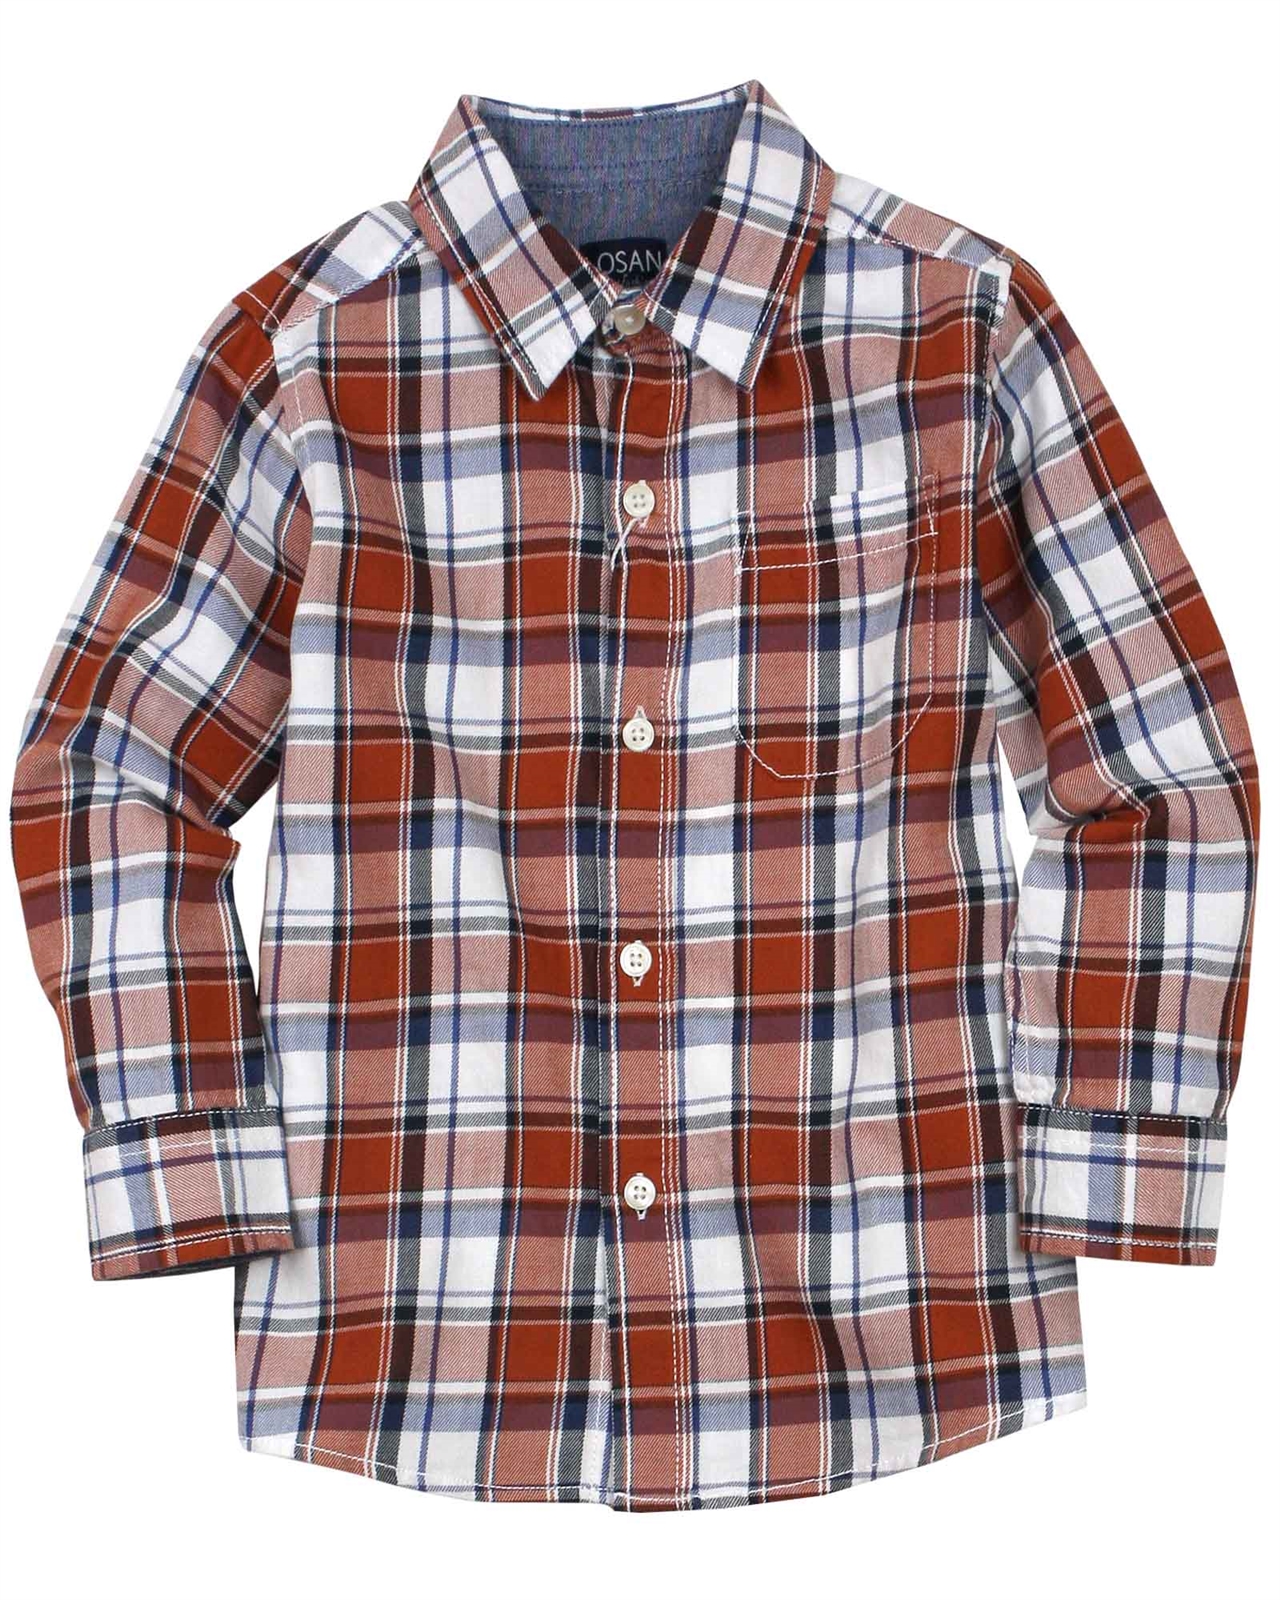 Losan Boys Plaid Shirt with Pocket - Losan - Losan Fall/Winter 2020/2021